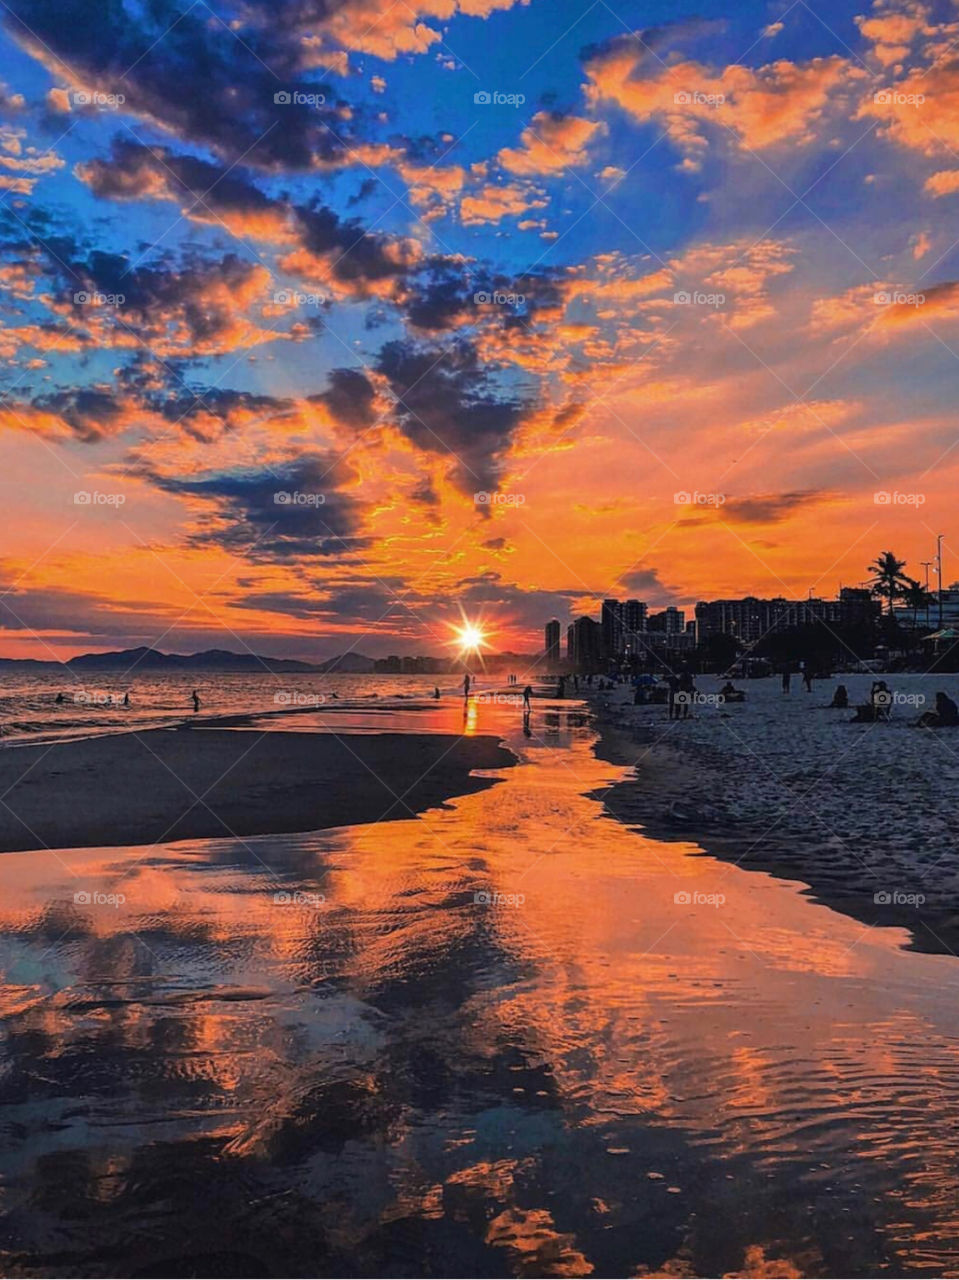 Brazilian Beach during sunset 